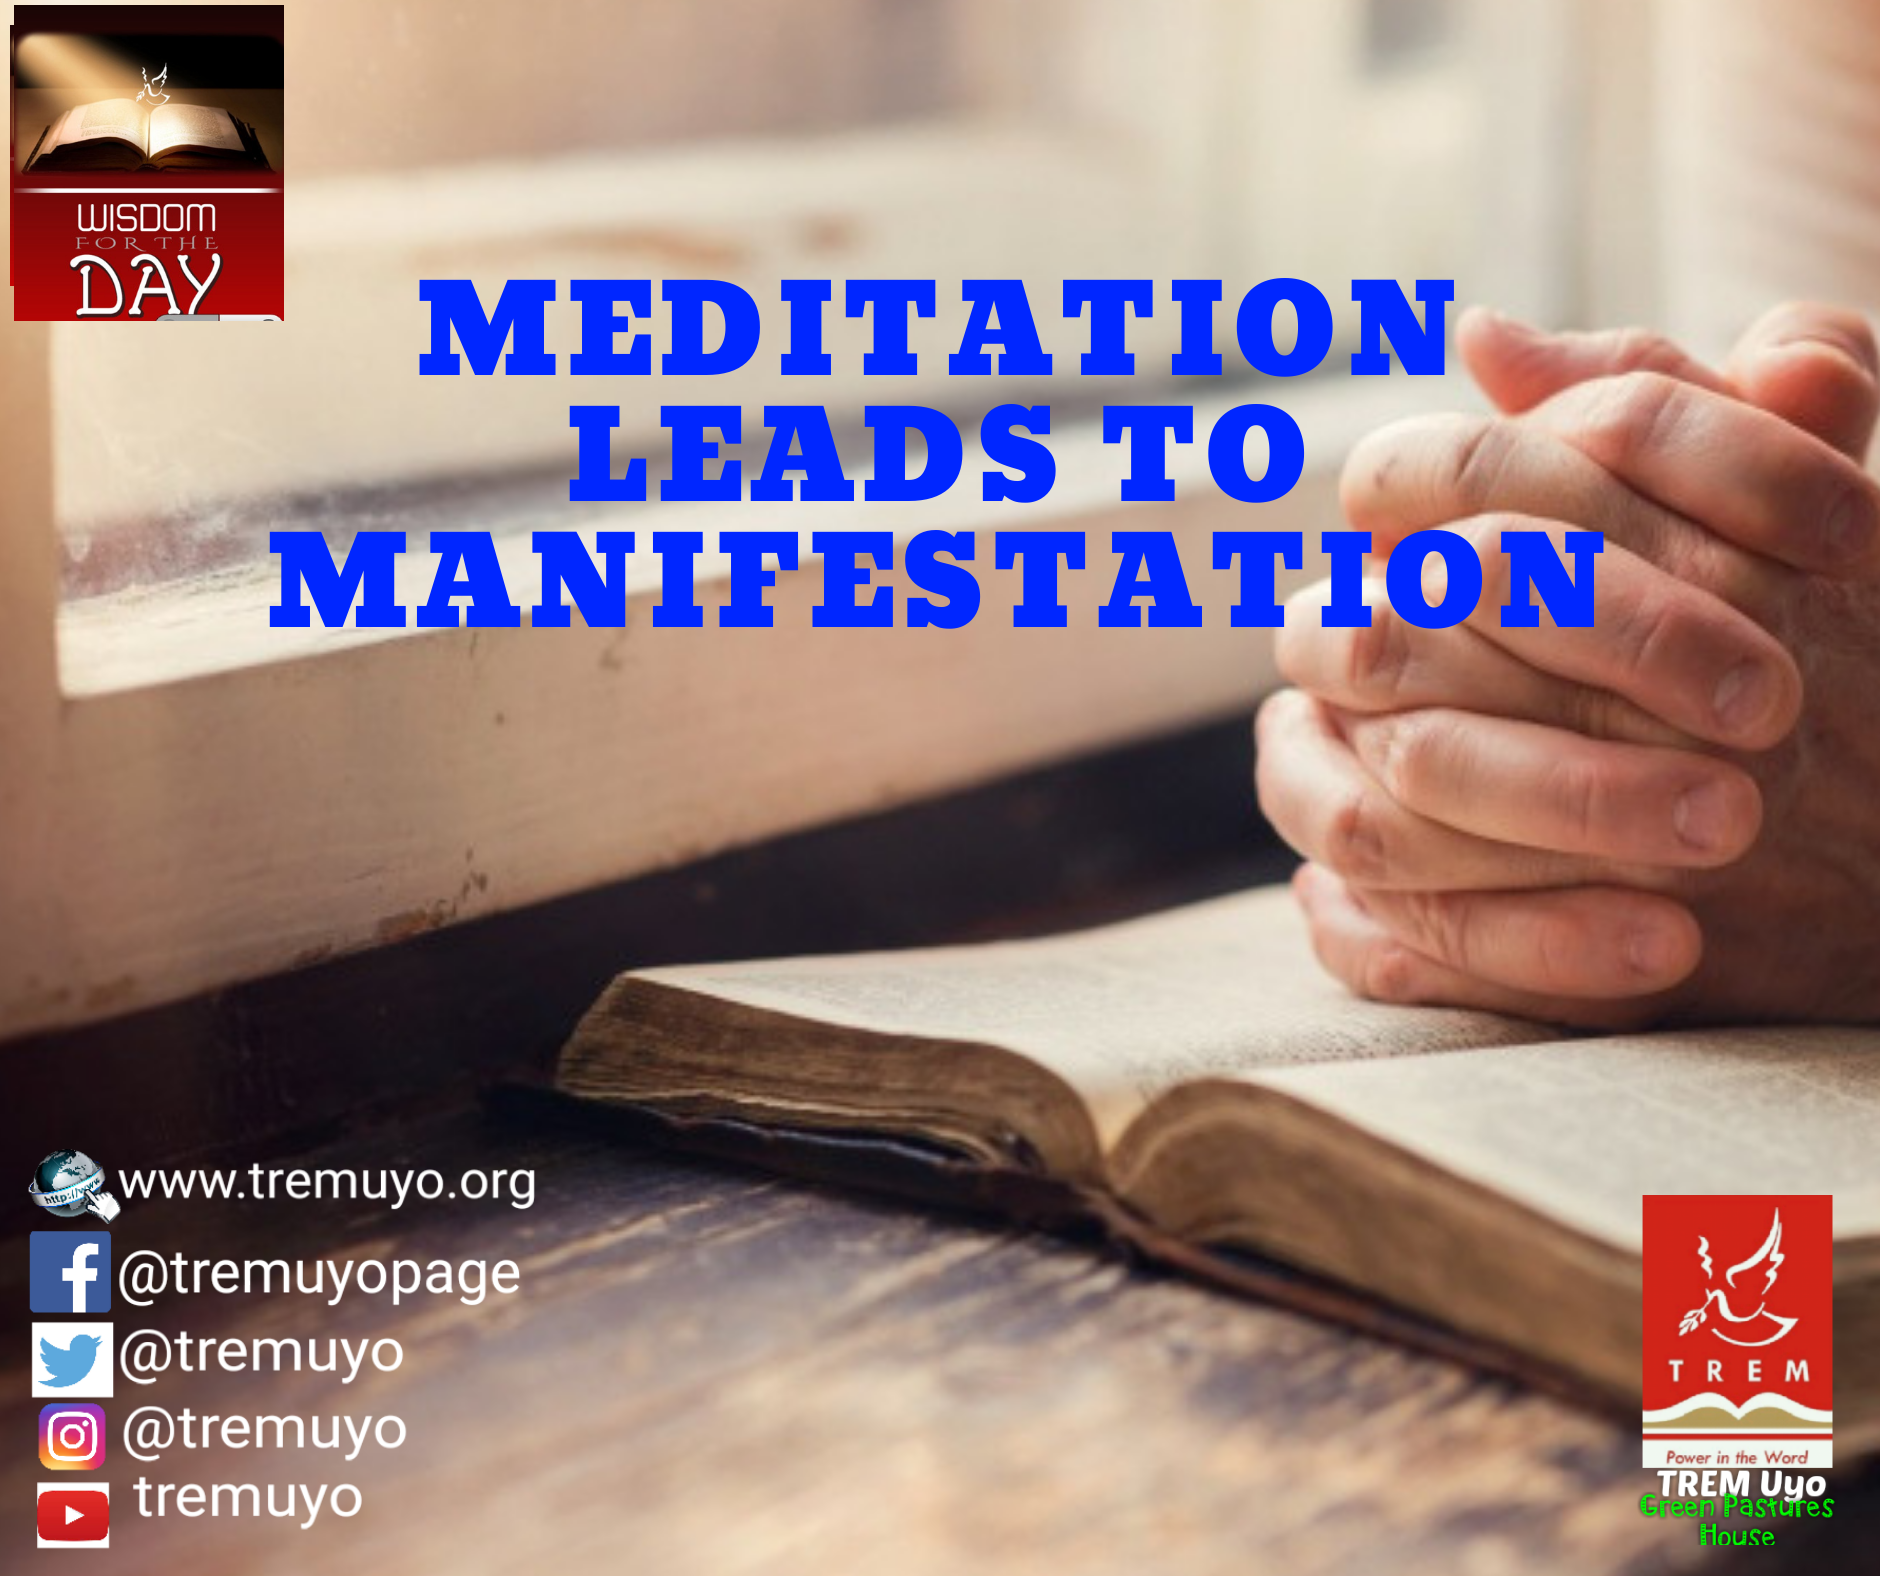 MEDITATION LEADS TO MANIFESTATION